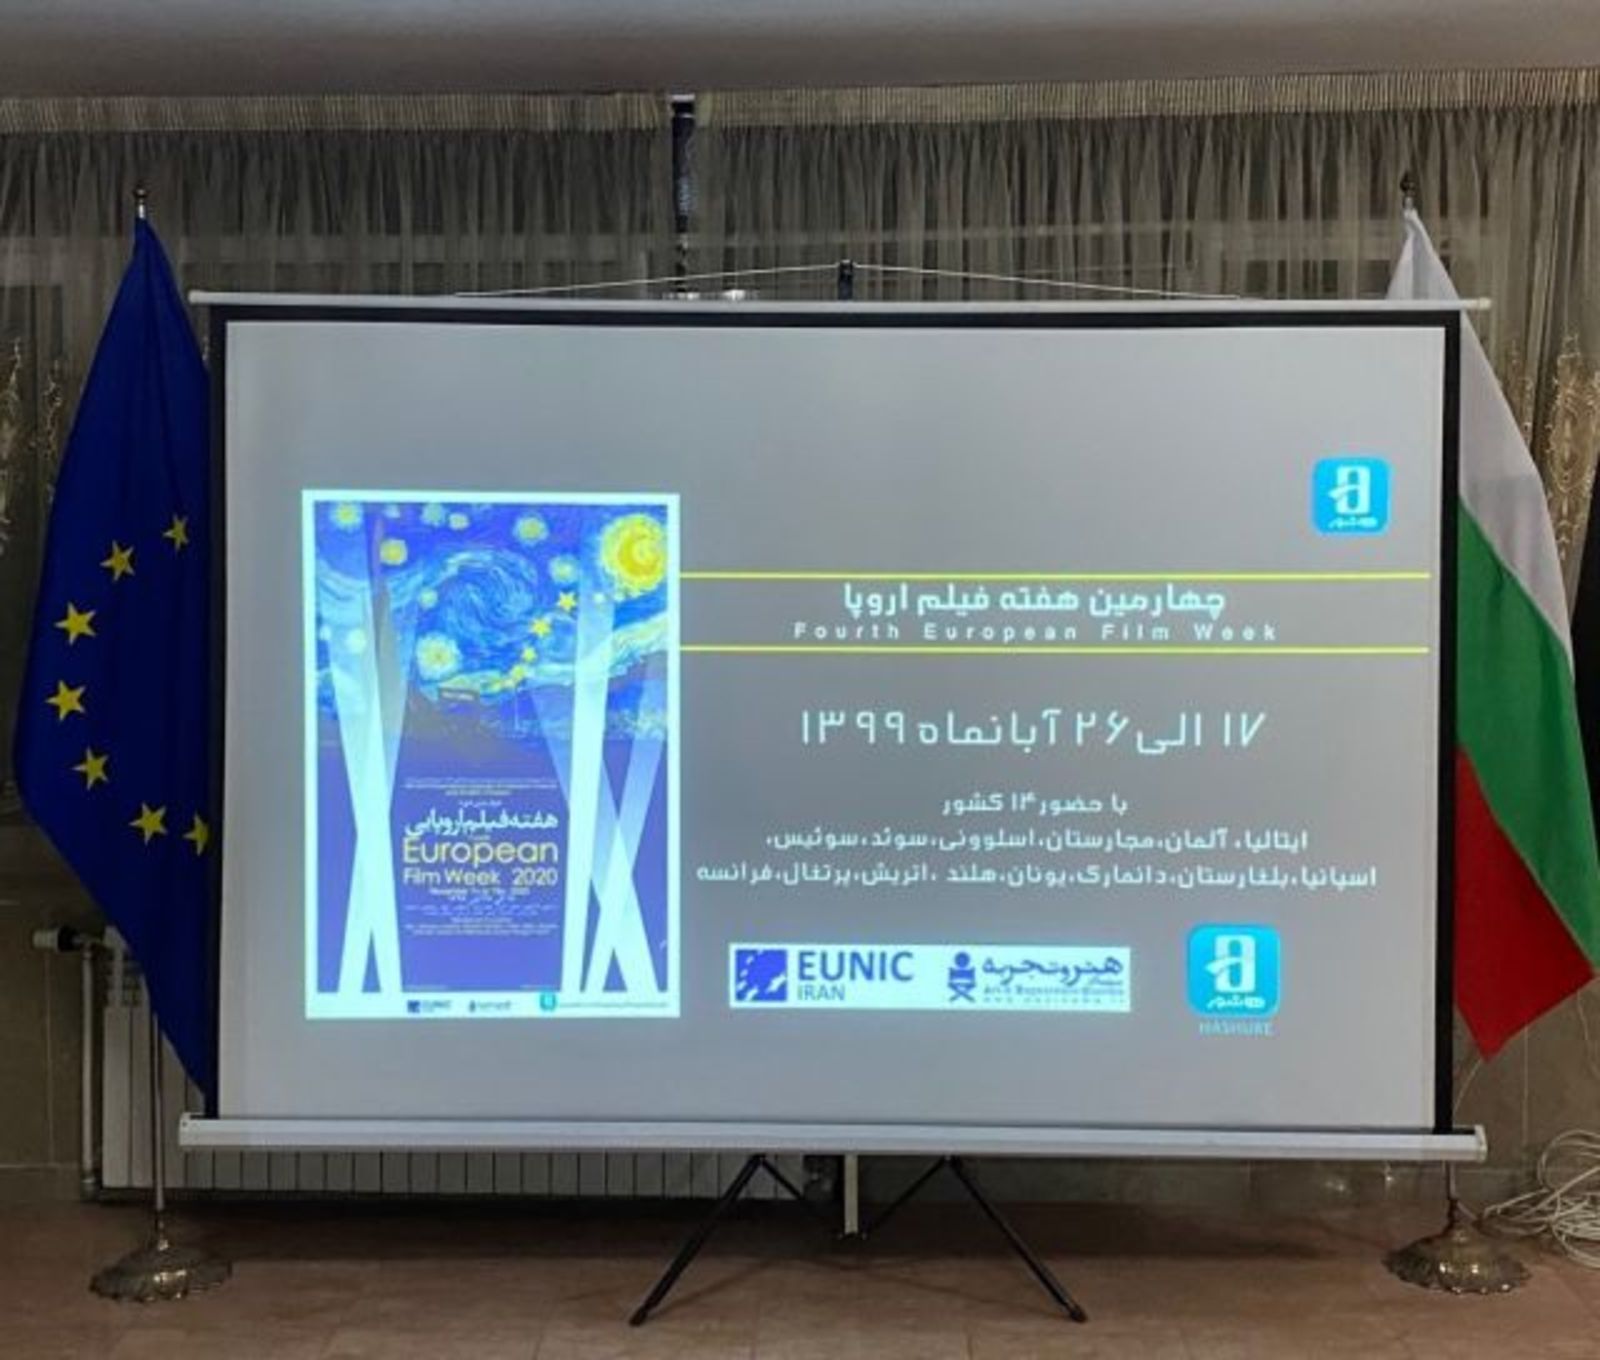 Bulgarian participation in the European Film Week, organized by EUNIC Iran